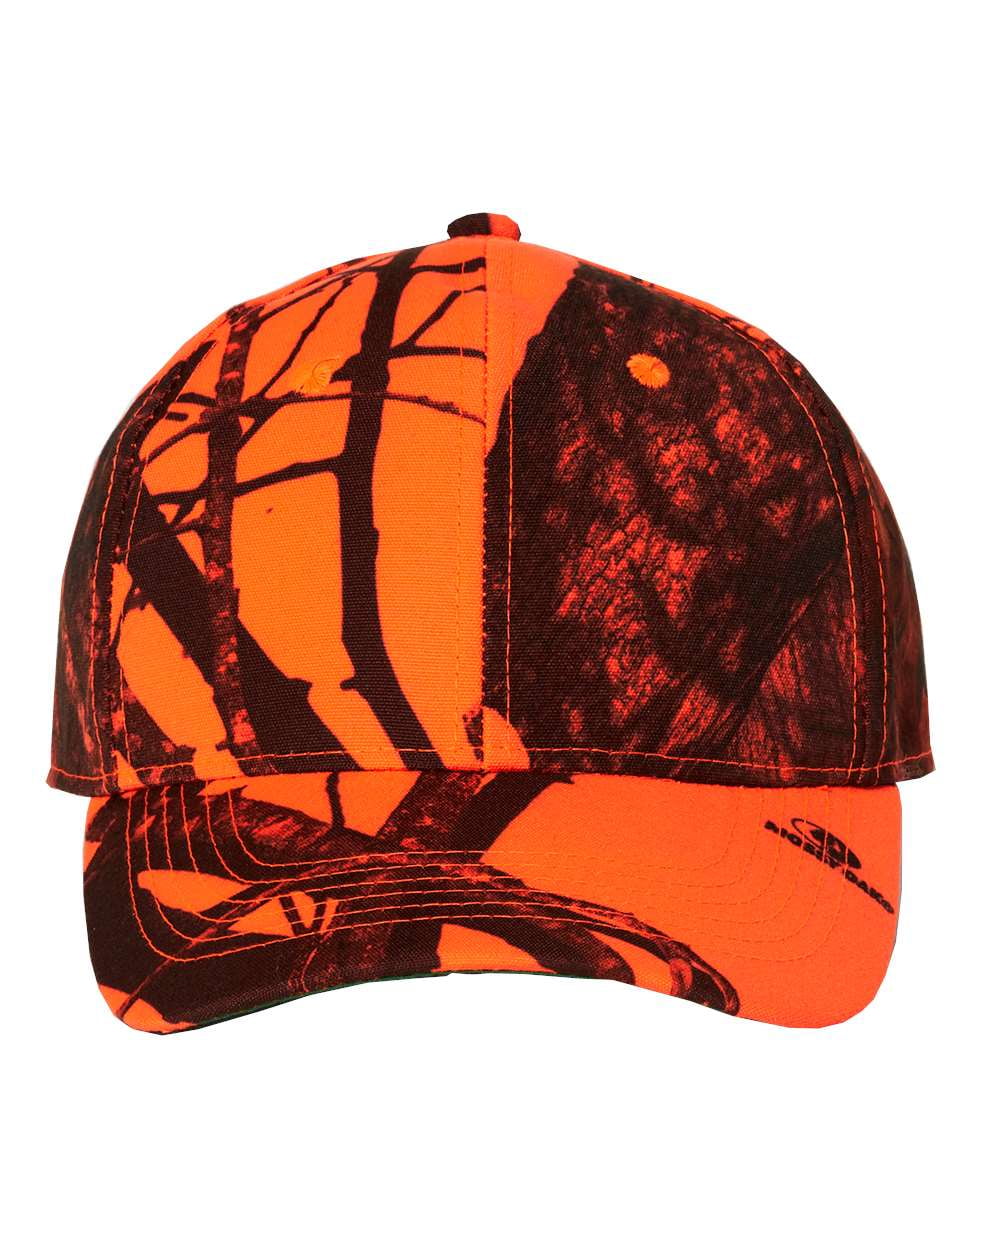 Outdoor Cap Trt80a Realtree Blaze Antlers Logo Hat for sale online 